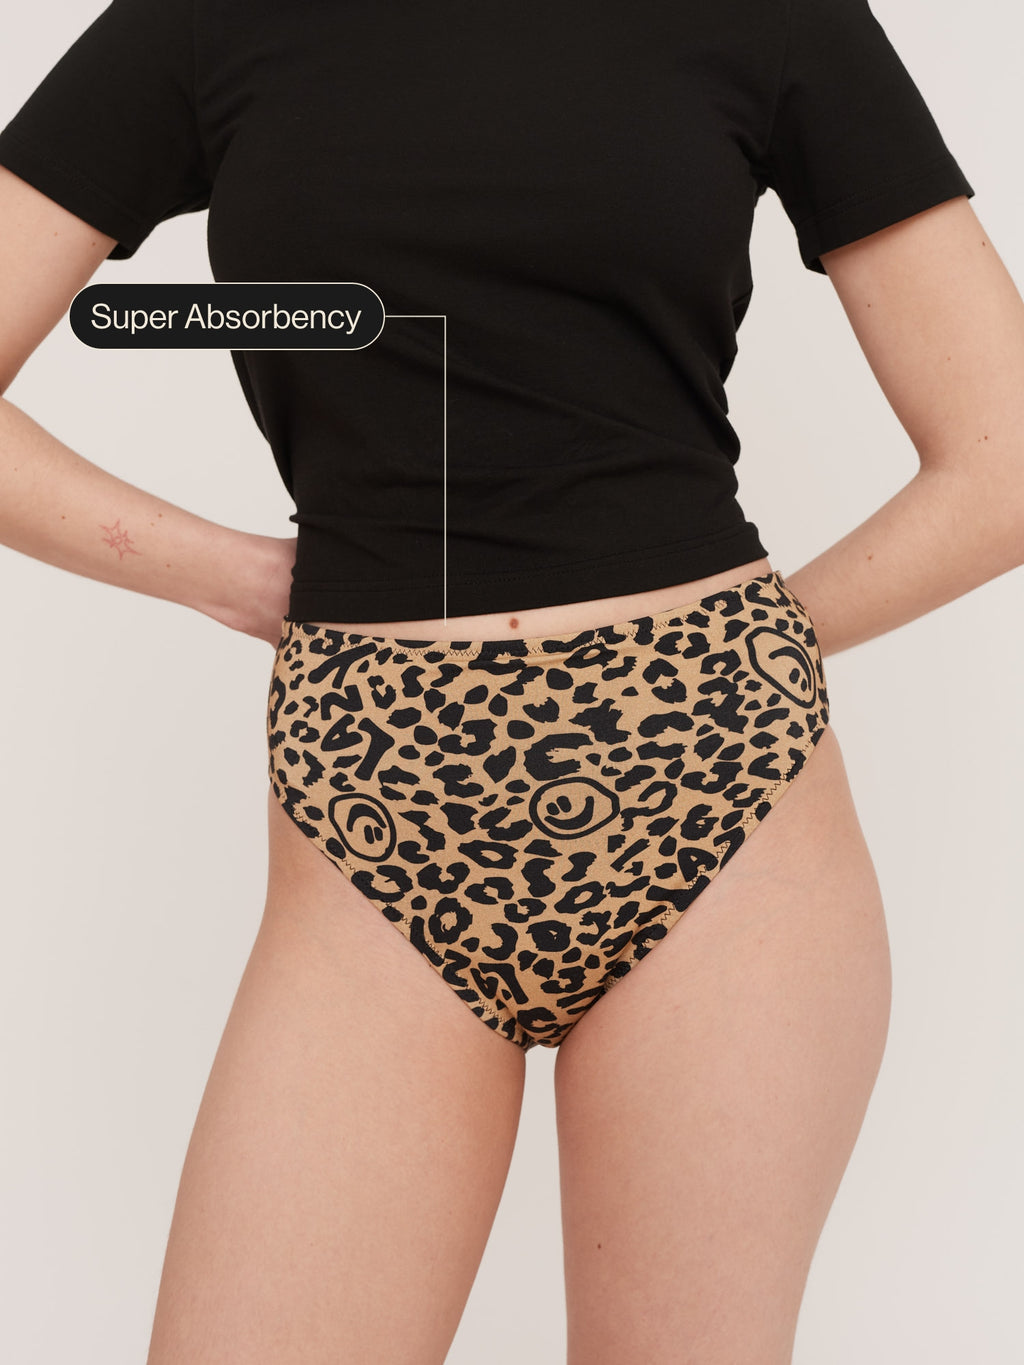 Lazy Oaf X ohne Leopard Period Pants - Super